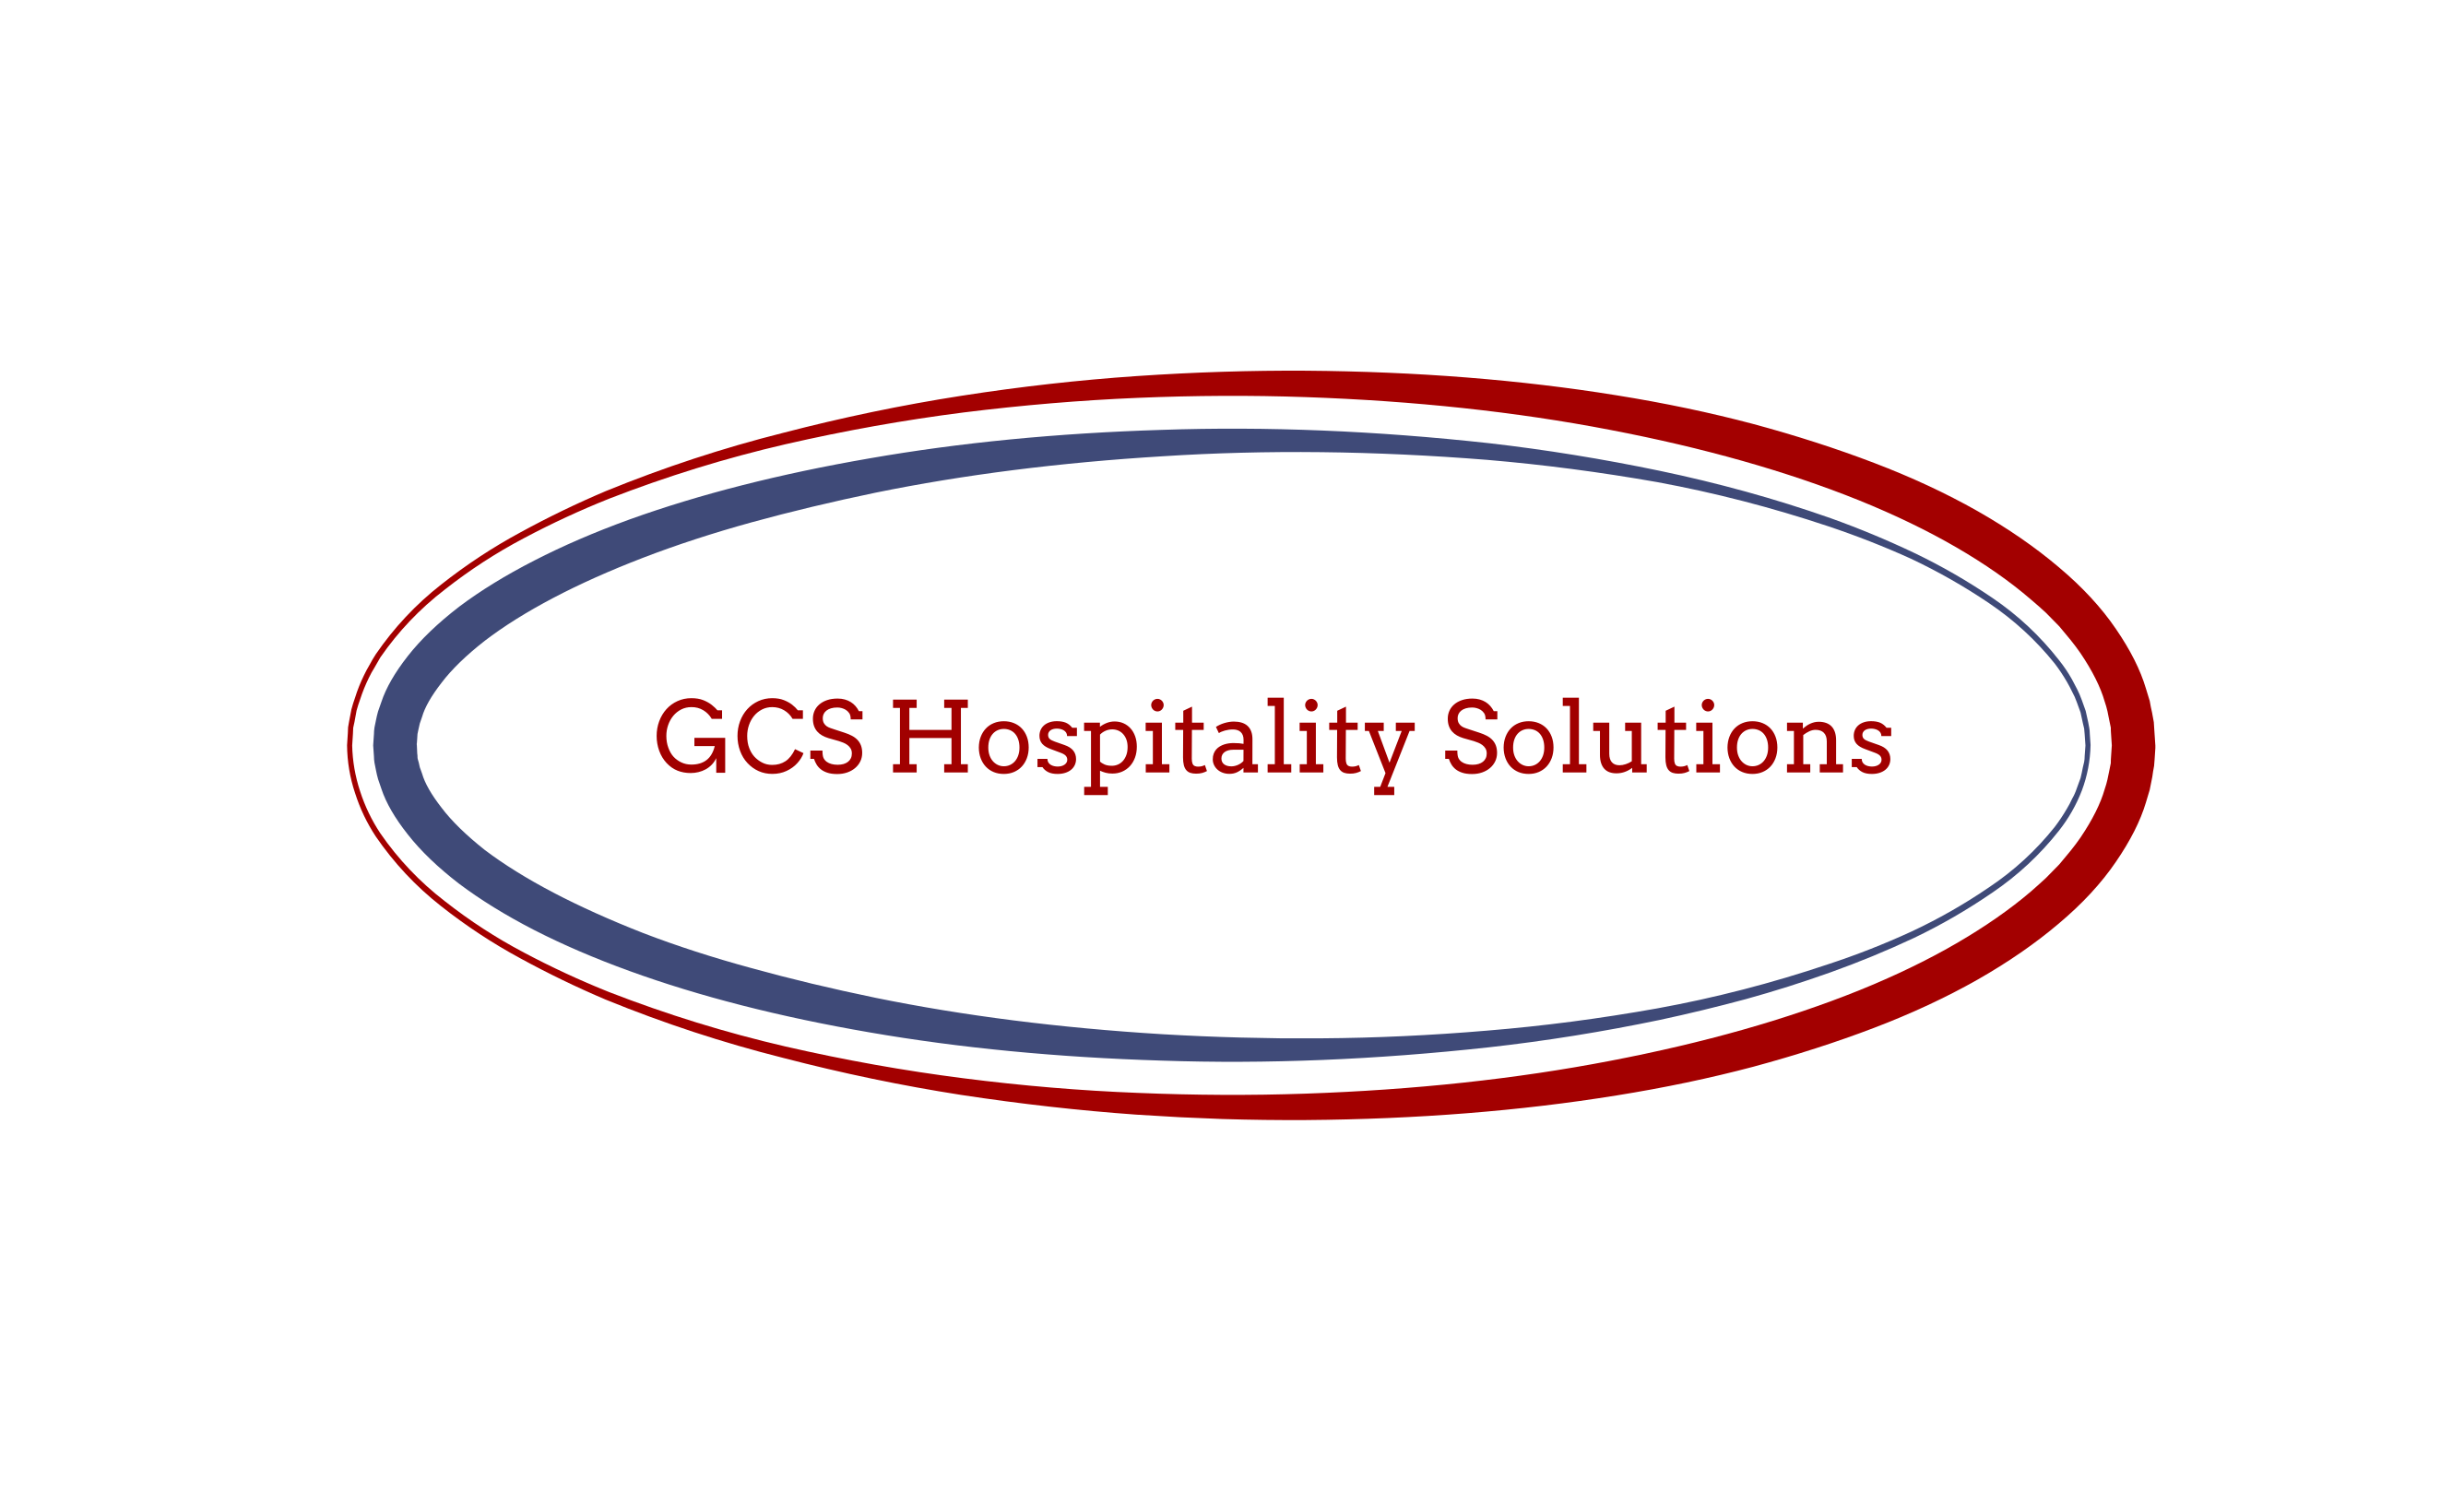 GCS hospitality